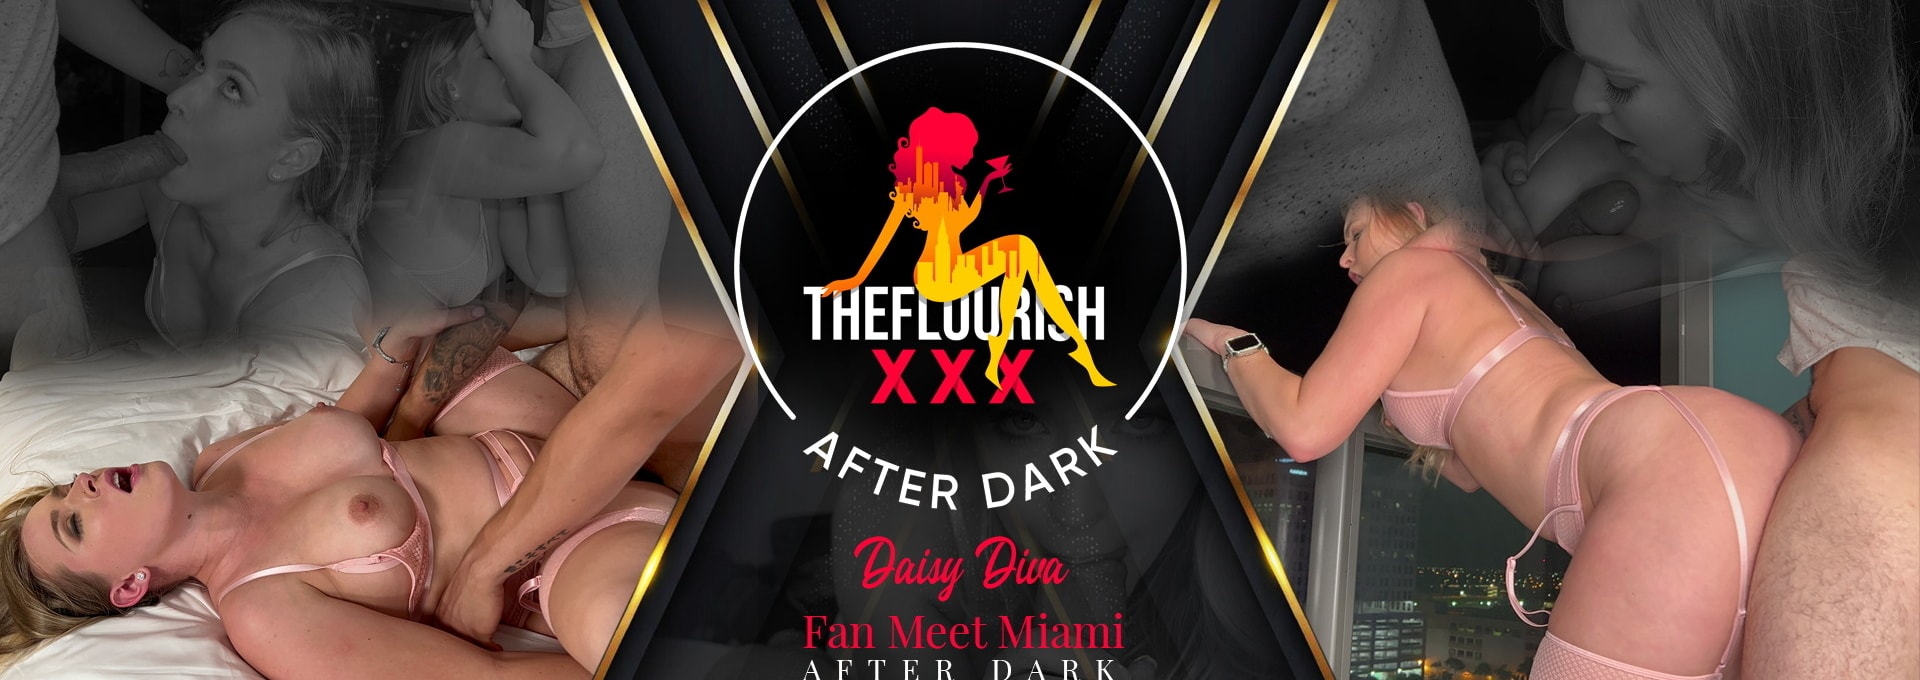 Daisy Diva does Miami Fan Meet After Dark